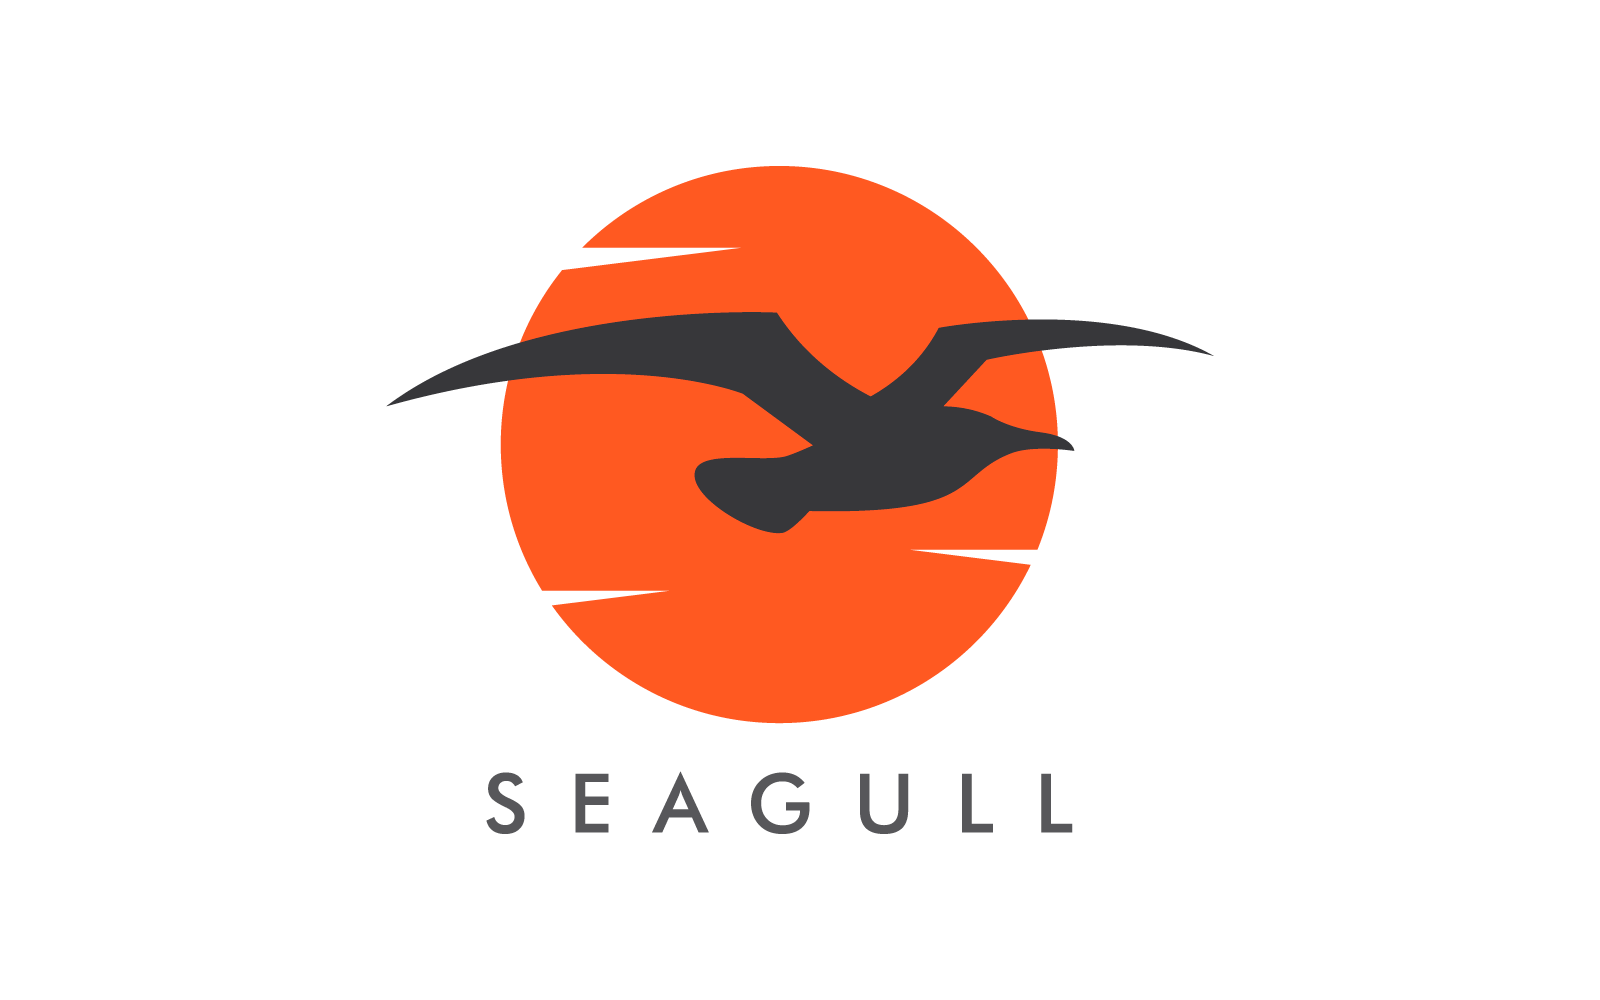 Seagull bird silhouette illustration vector design Logo Template